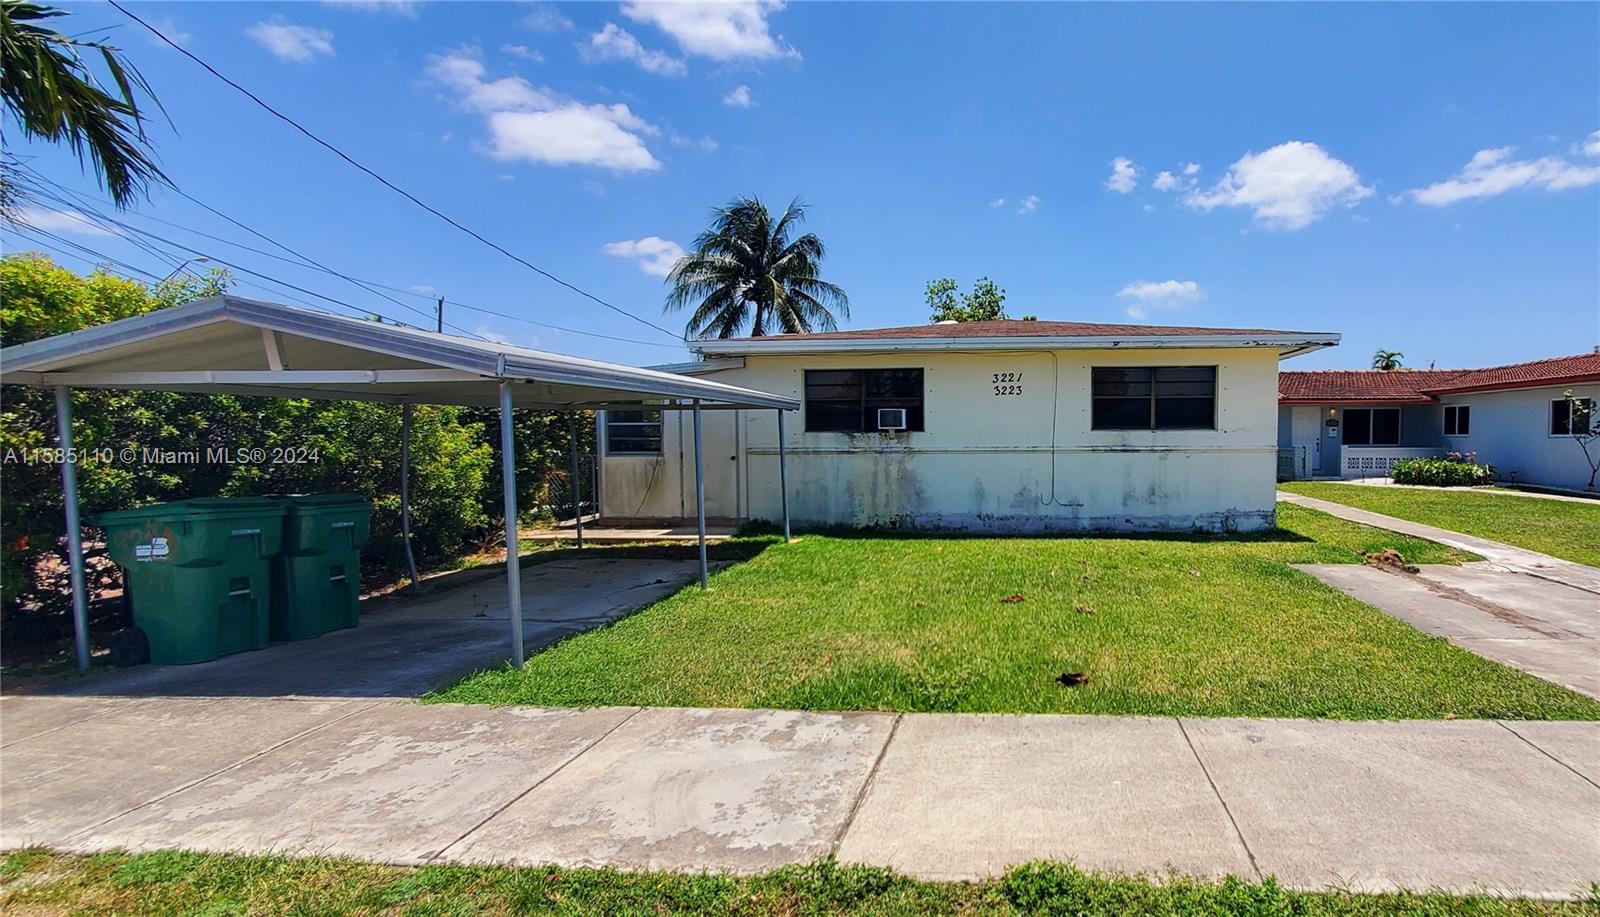 Rental Property at 3221 Sw 90th Ave, Miami, Broward County, Florida -  - $650,000 MO.